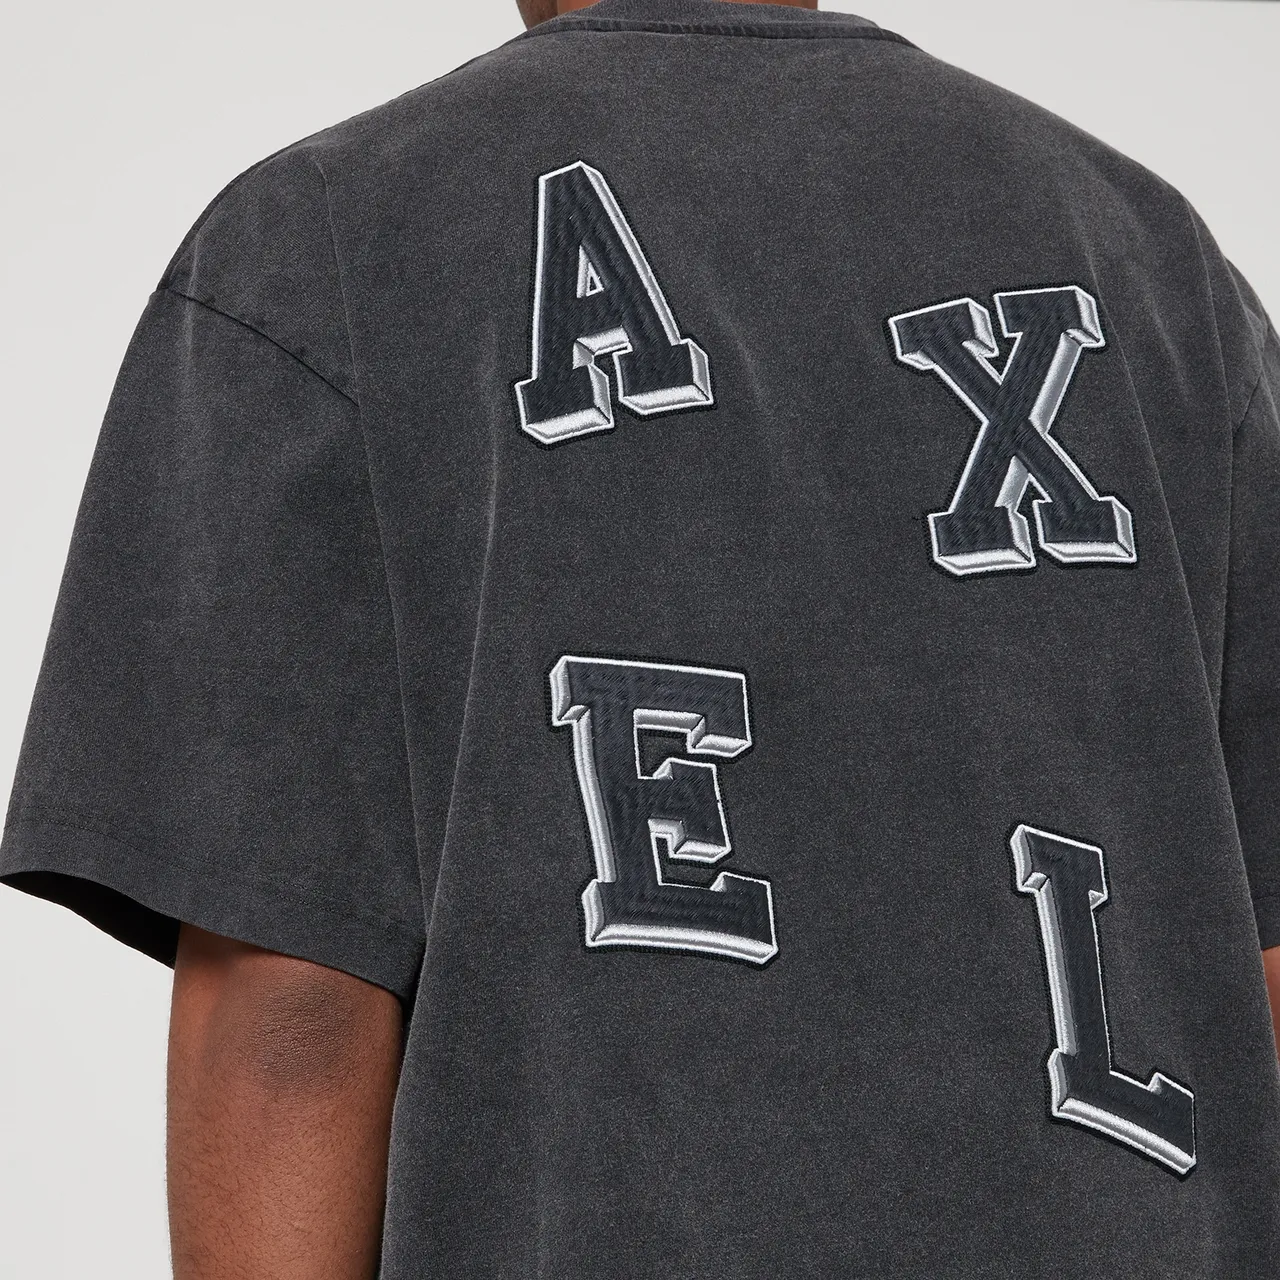 Axel Arigato Typo Embroidered Organic Cotton T-Shirt